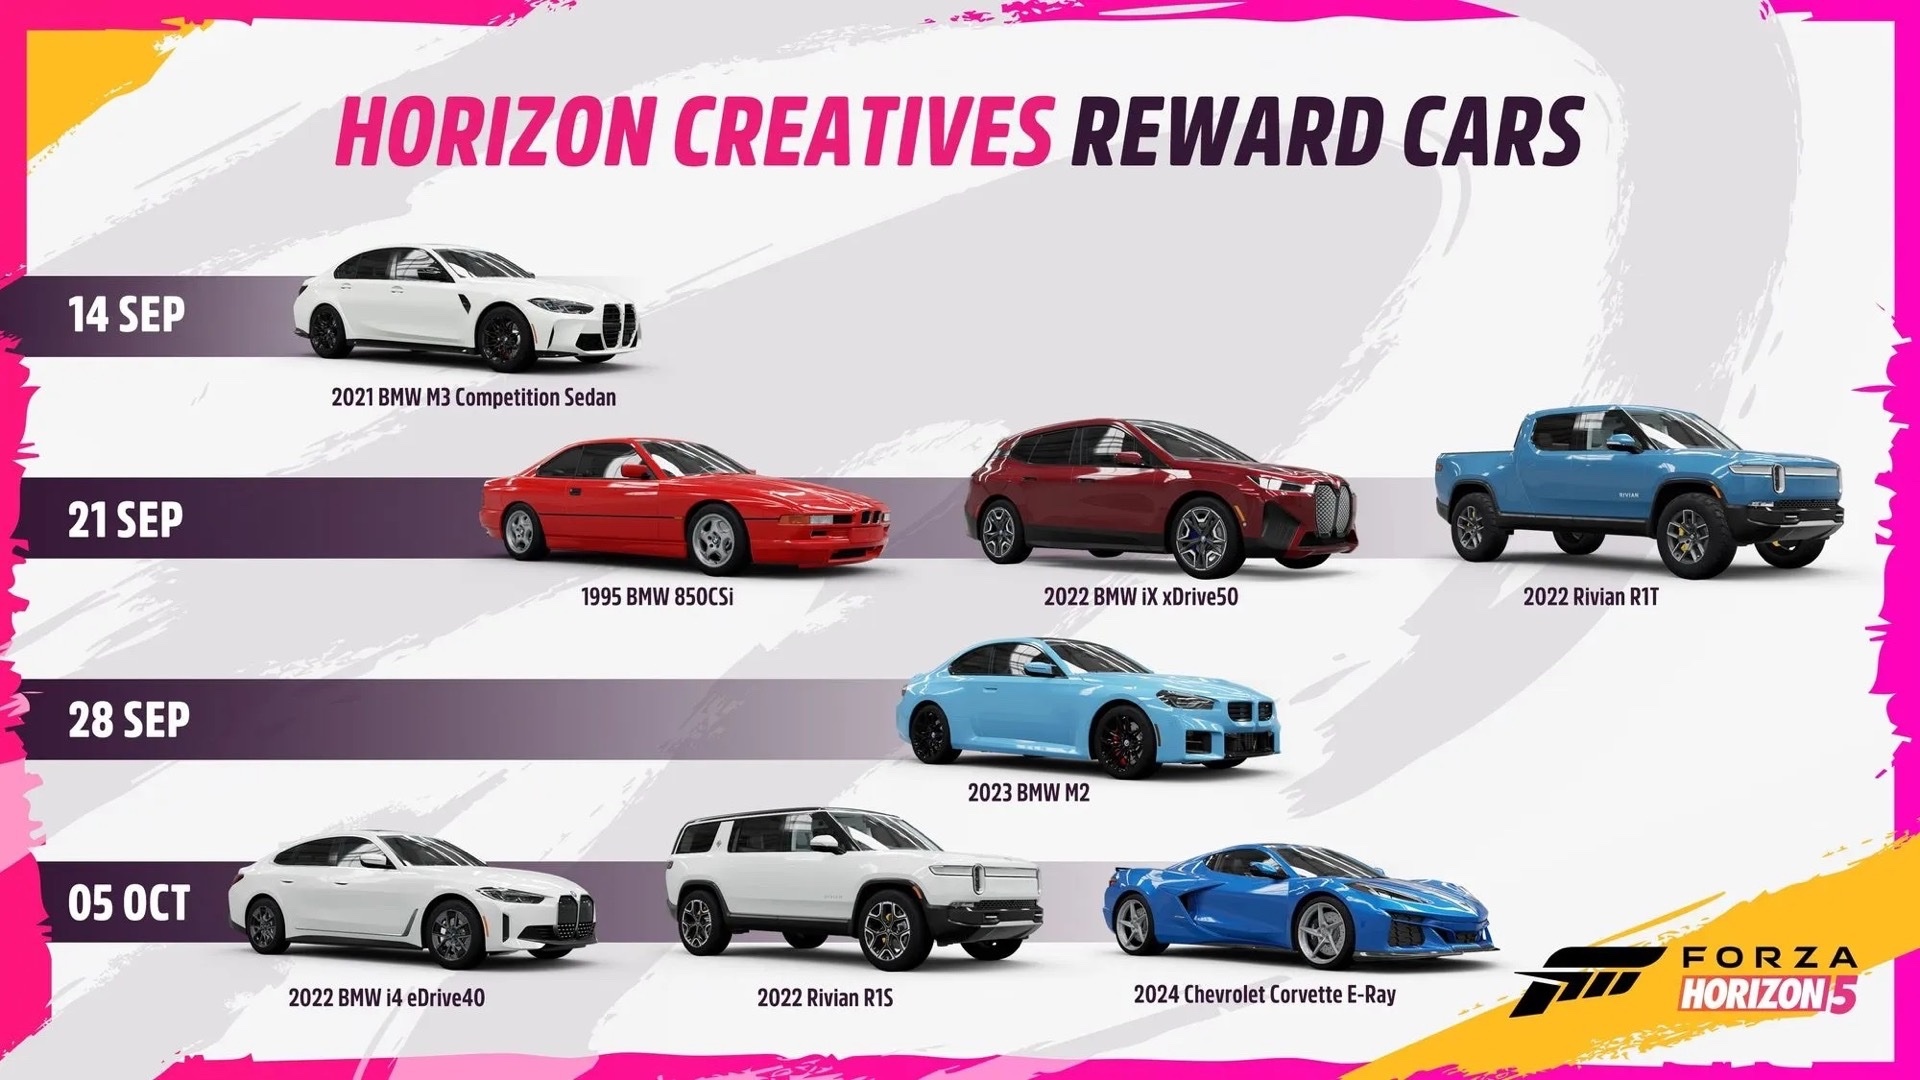 How To Buy Forza Horizon 5 on PS4? (2023) 